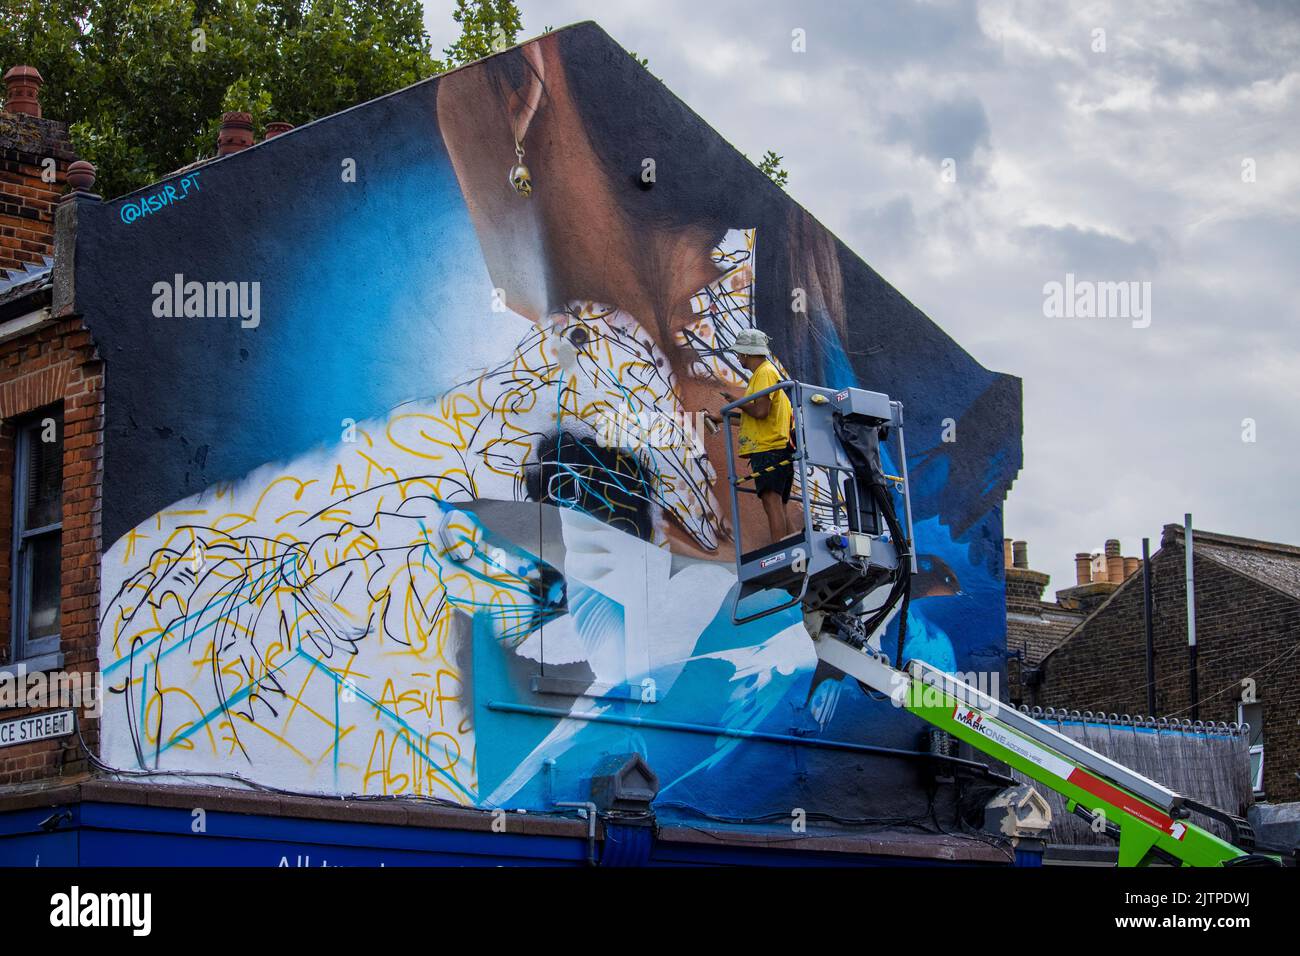 Graffiti art and artists at the Southend City Jam Street Art Festival, Southend-on-Sea, September 2022 © Clarissa Debenham / Alamy Stock Photo